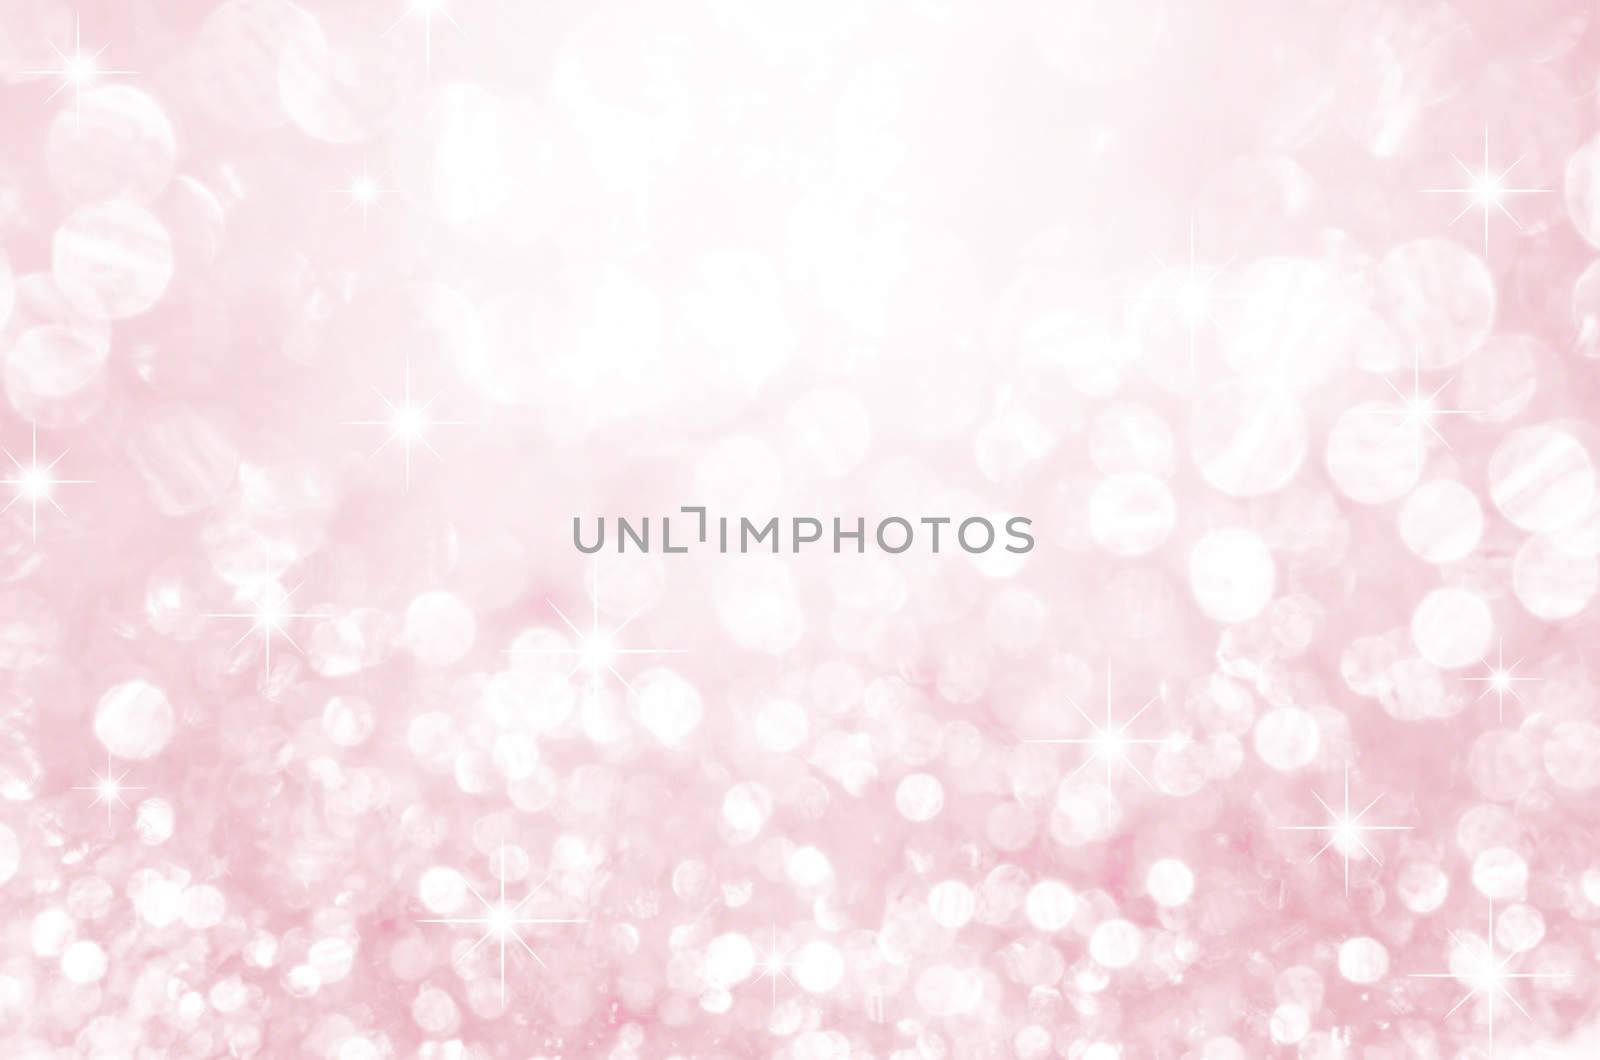 Lights on pink background. by Gamjai